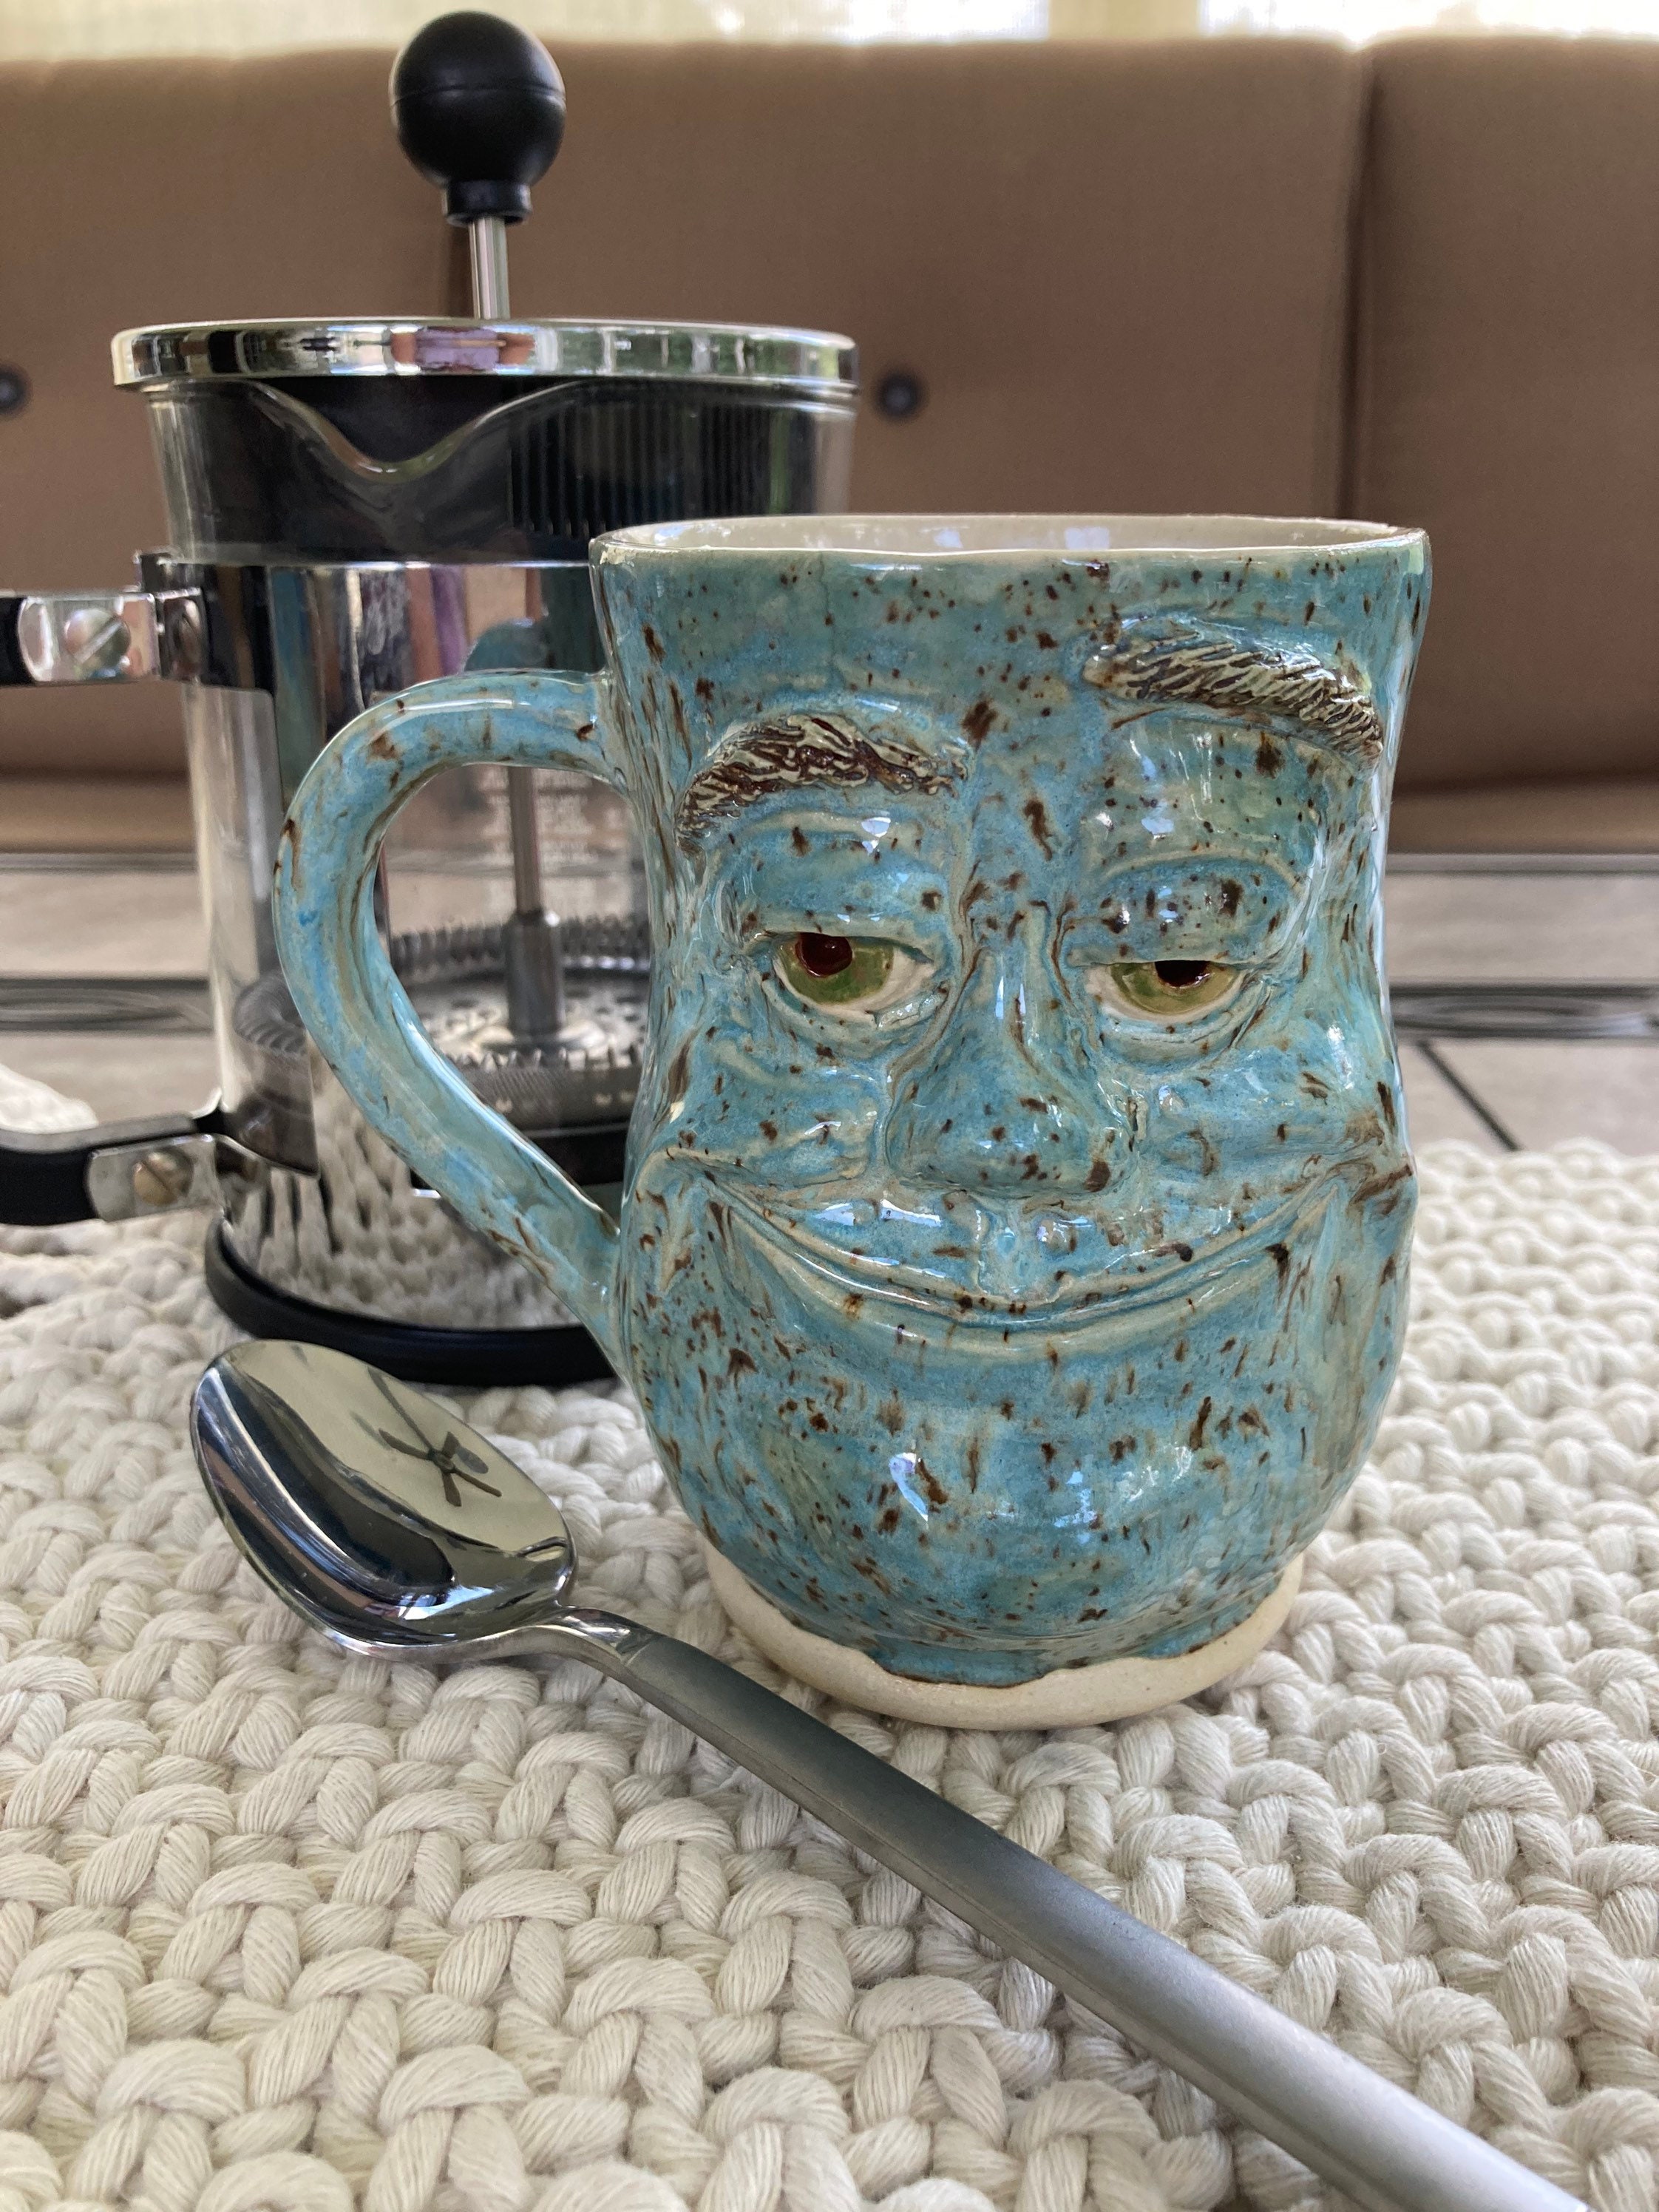 Creature Cups Elephant Coffee Mug Blue Ceramic Hidden Animal Gift